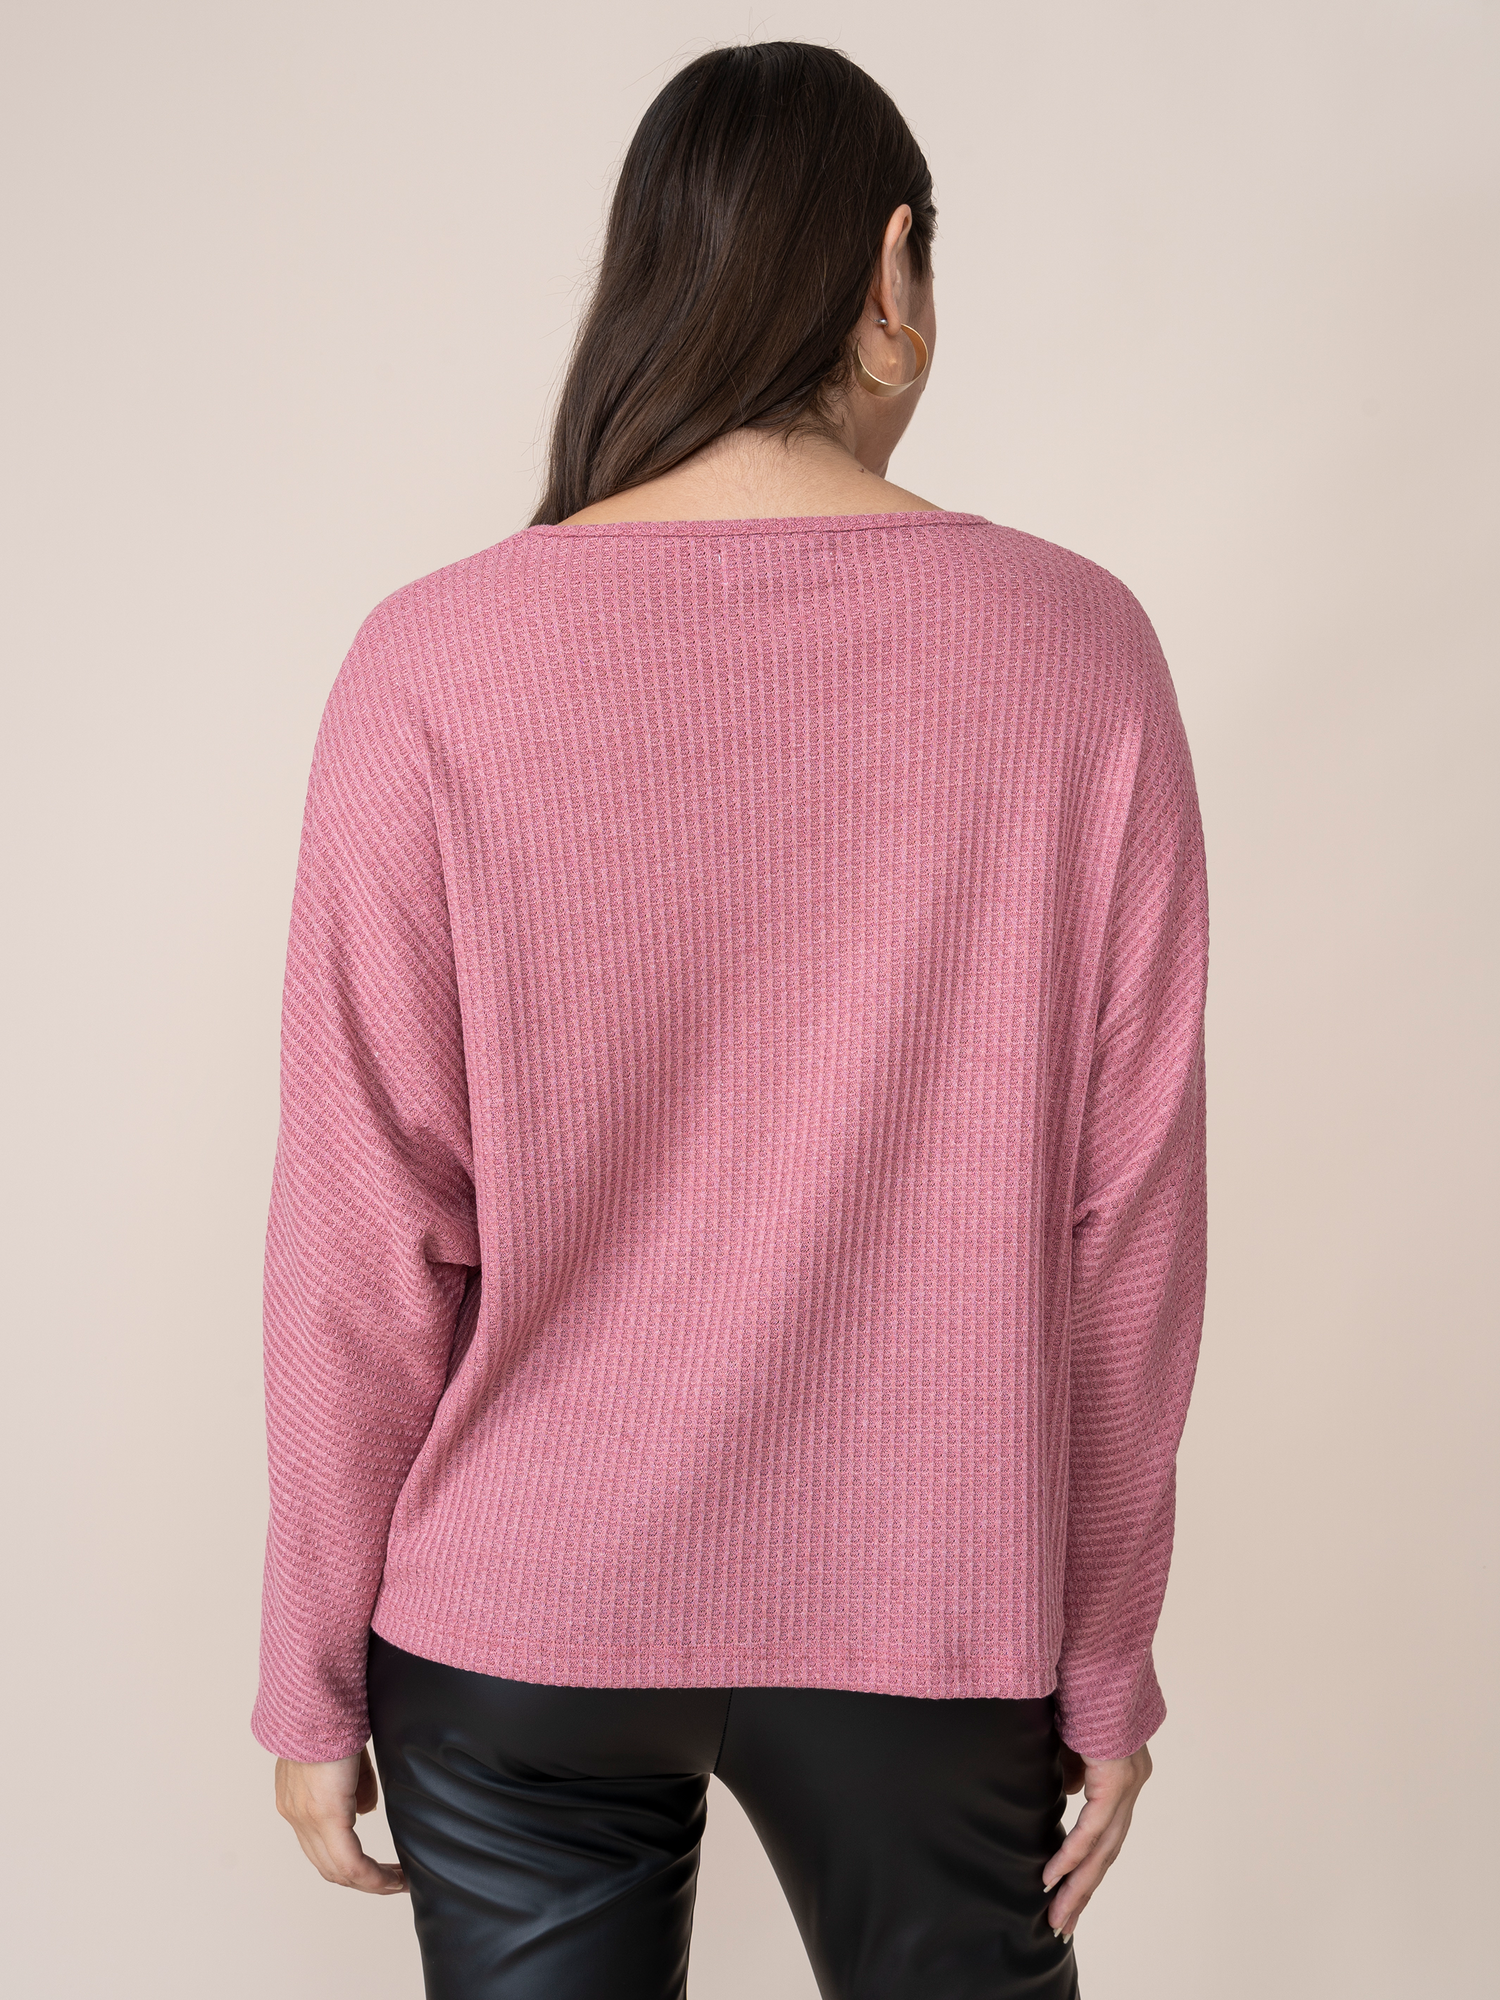 Elena Palo Rosa Sweater